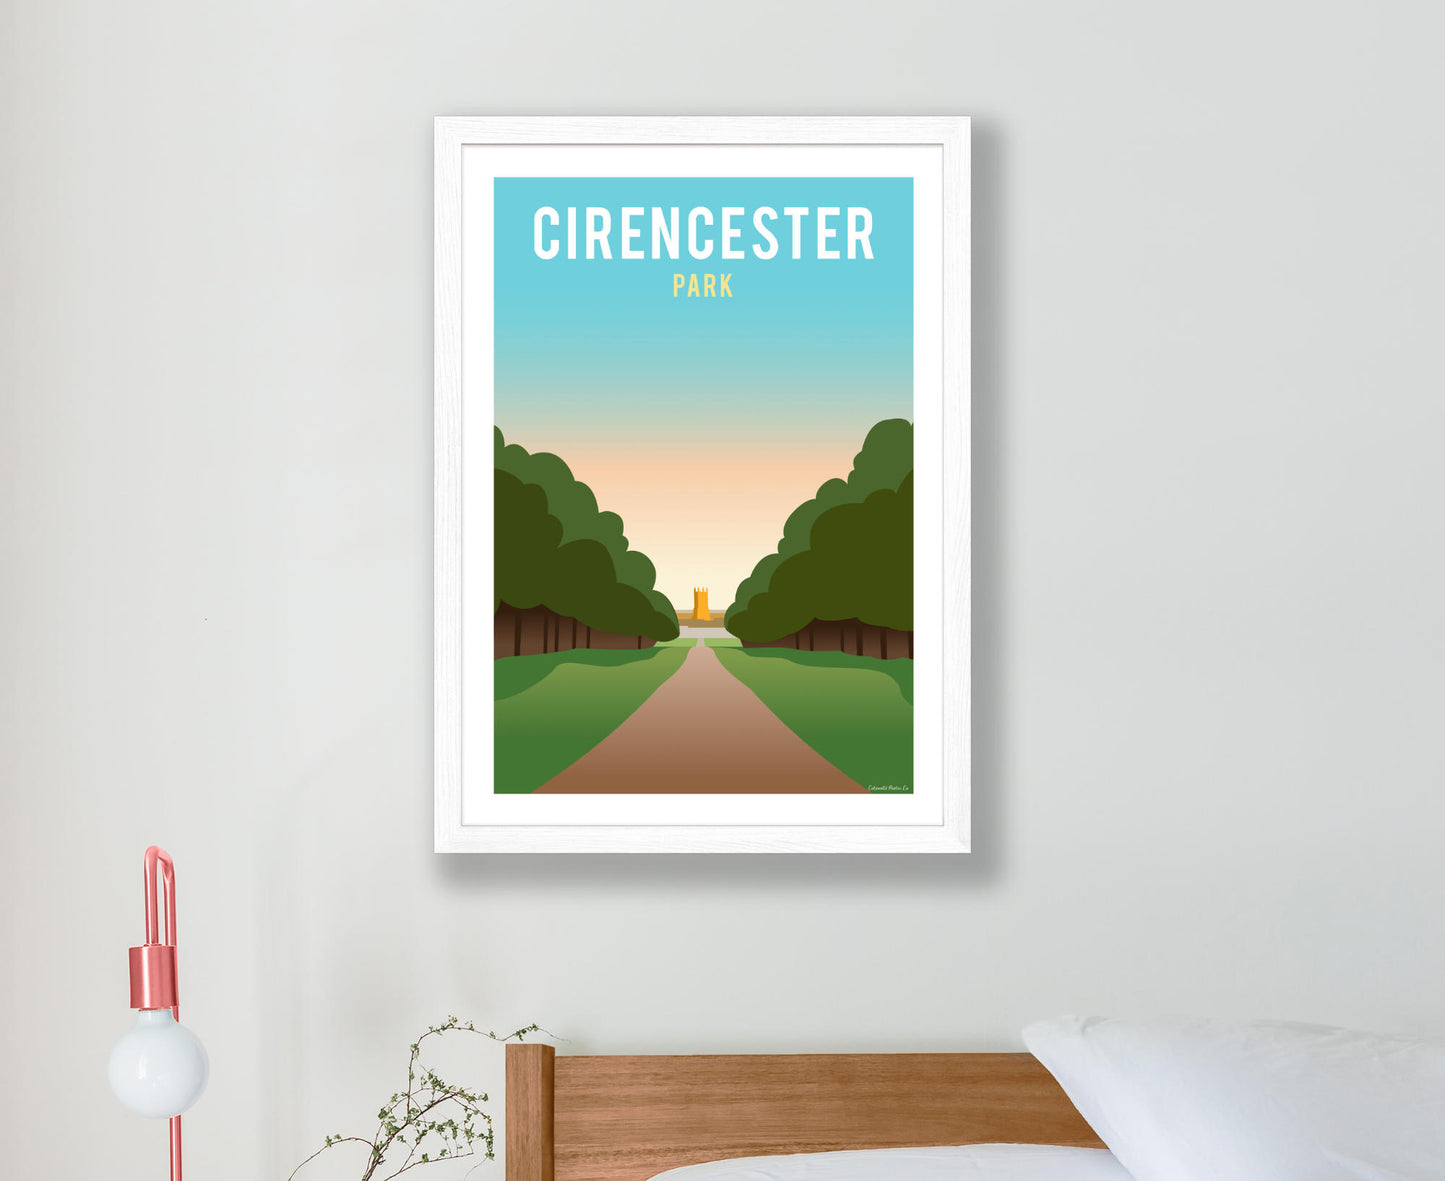 Cirencester Park Poster in white frame